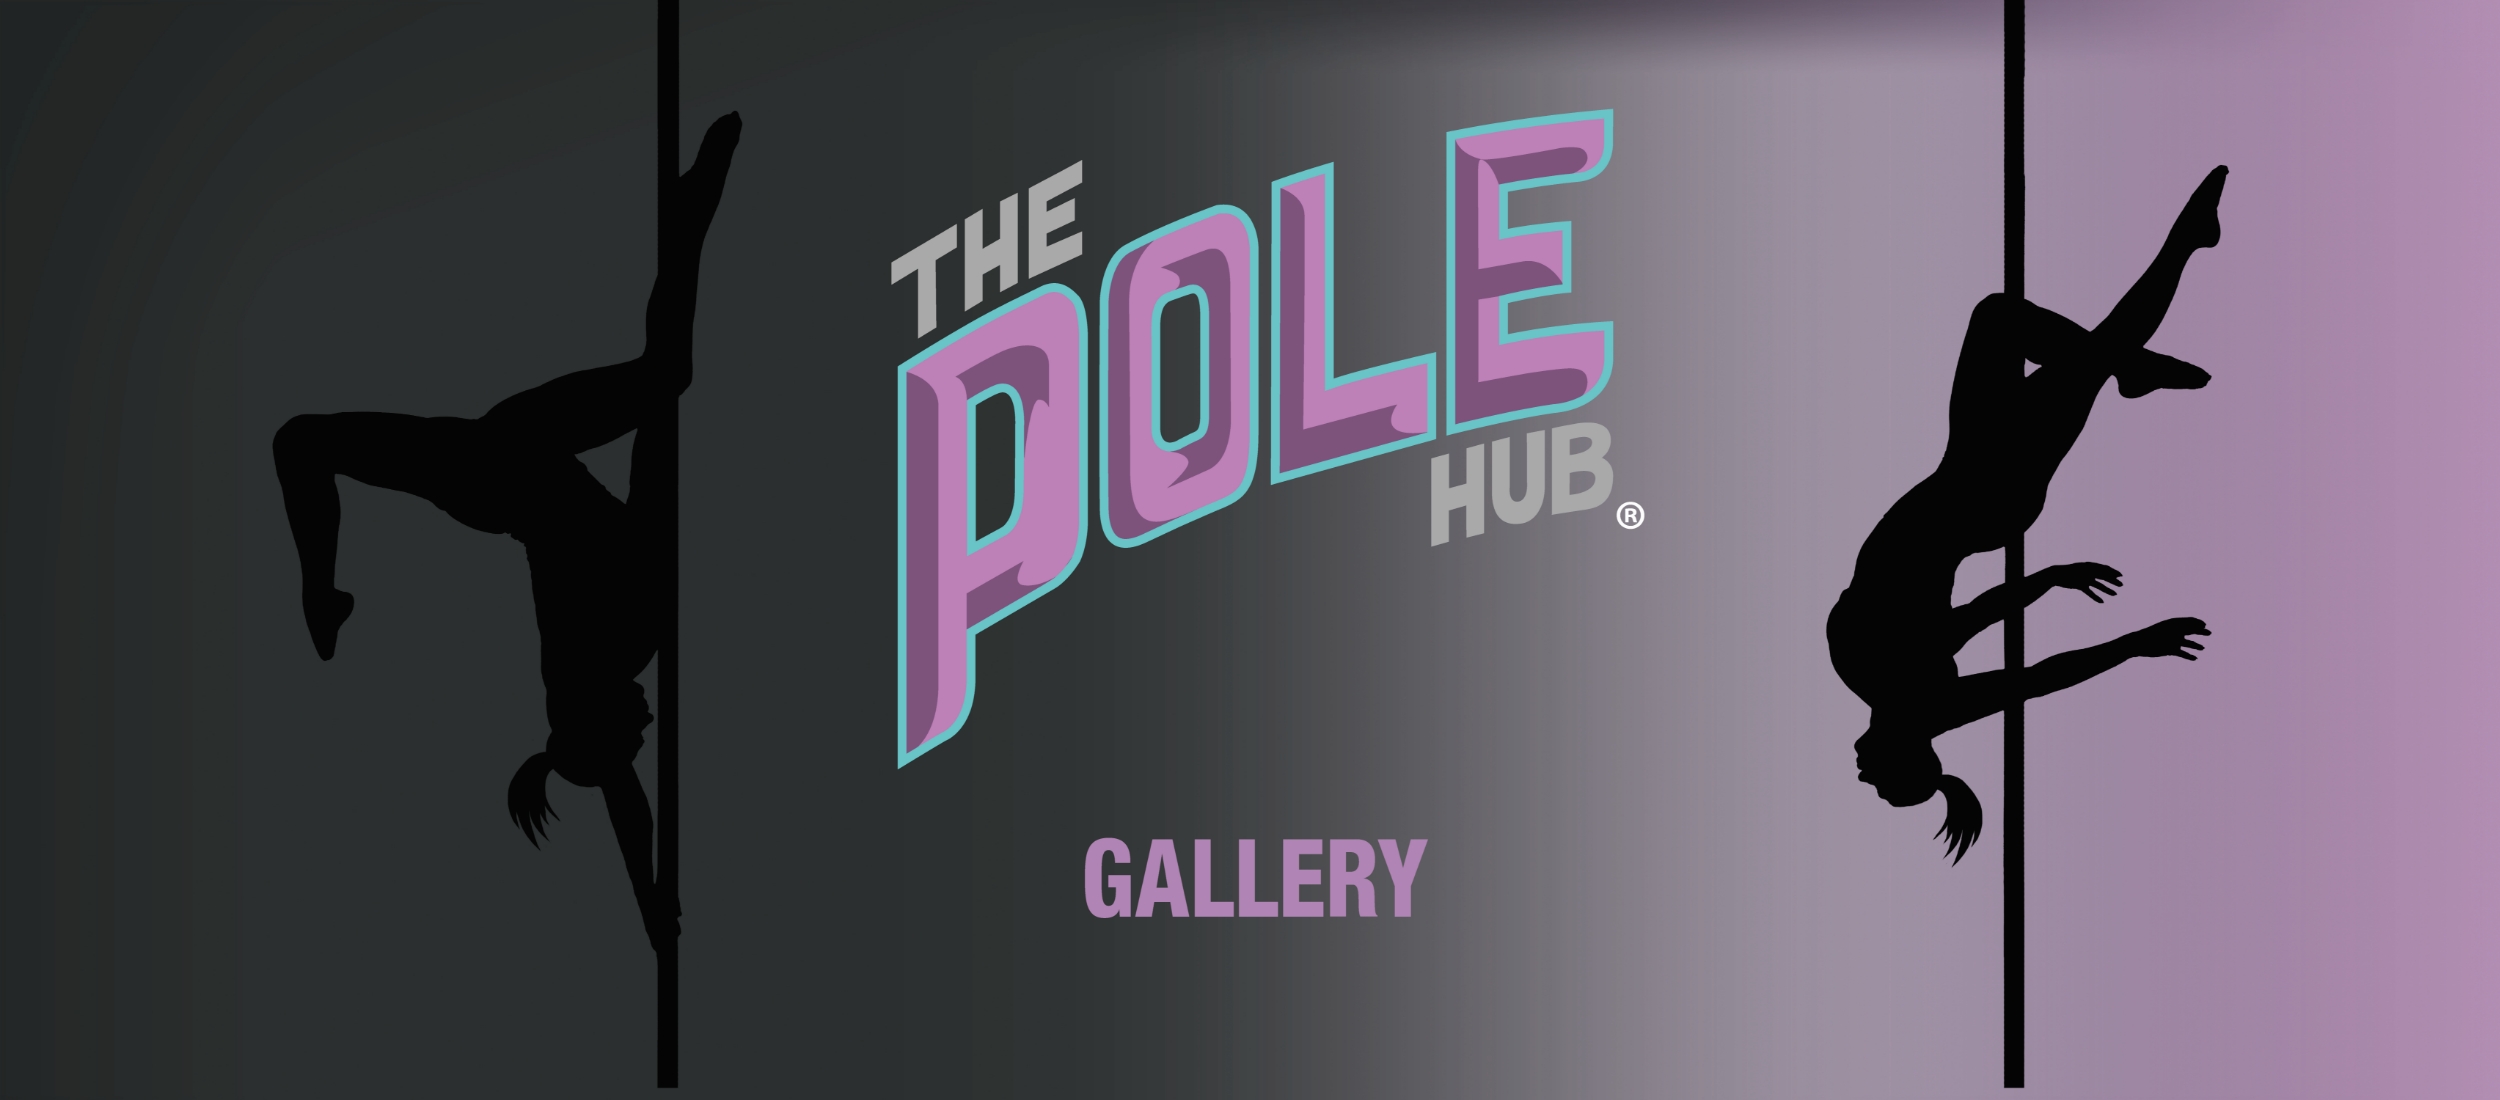 The Pole Hub - Gallery